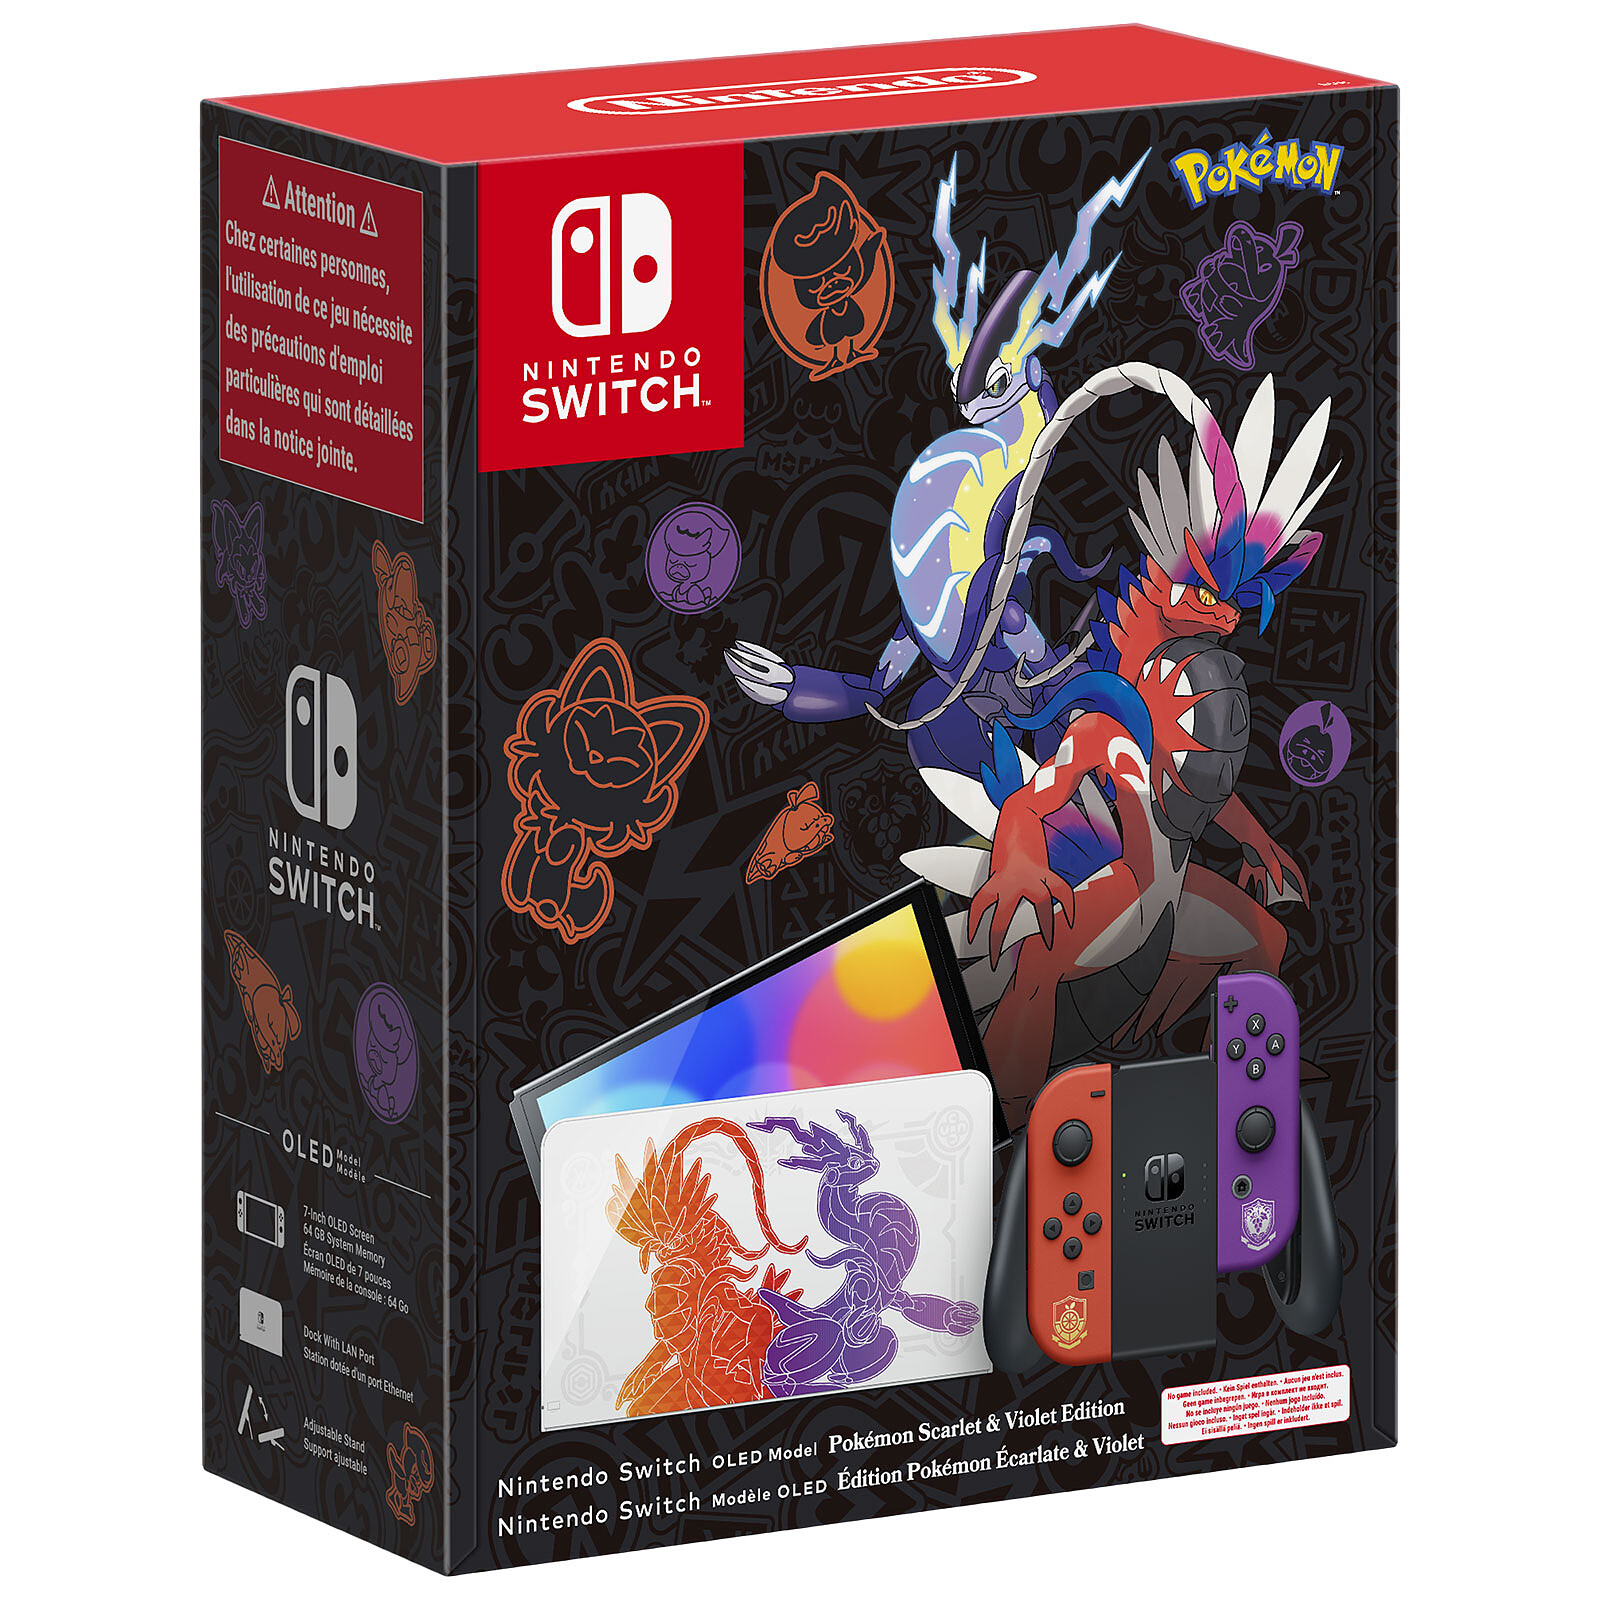 Nintendo Switch OLED (Pokémon Limited Edition) - Nintendo Switch